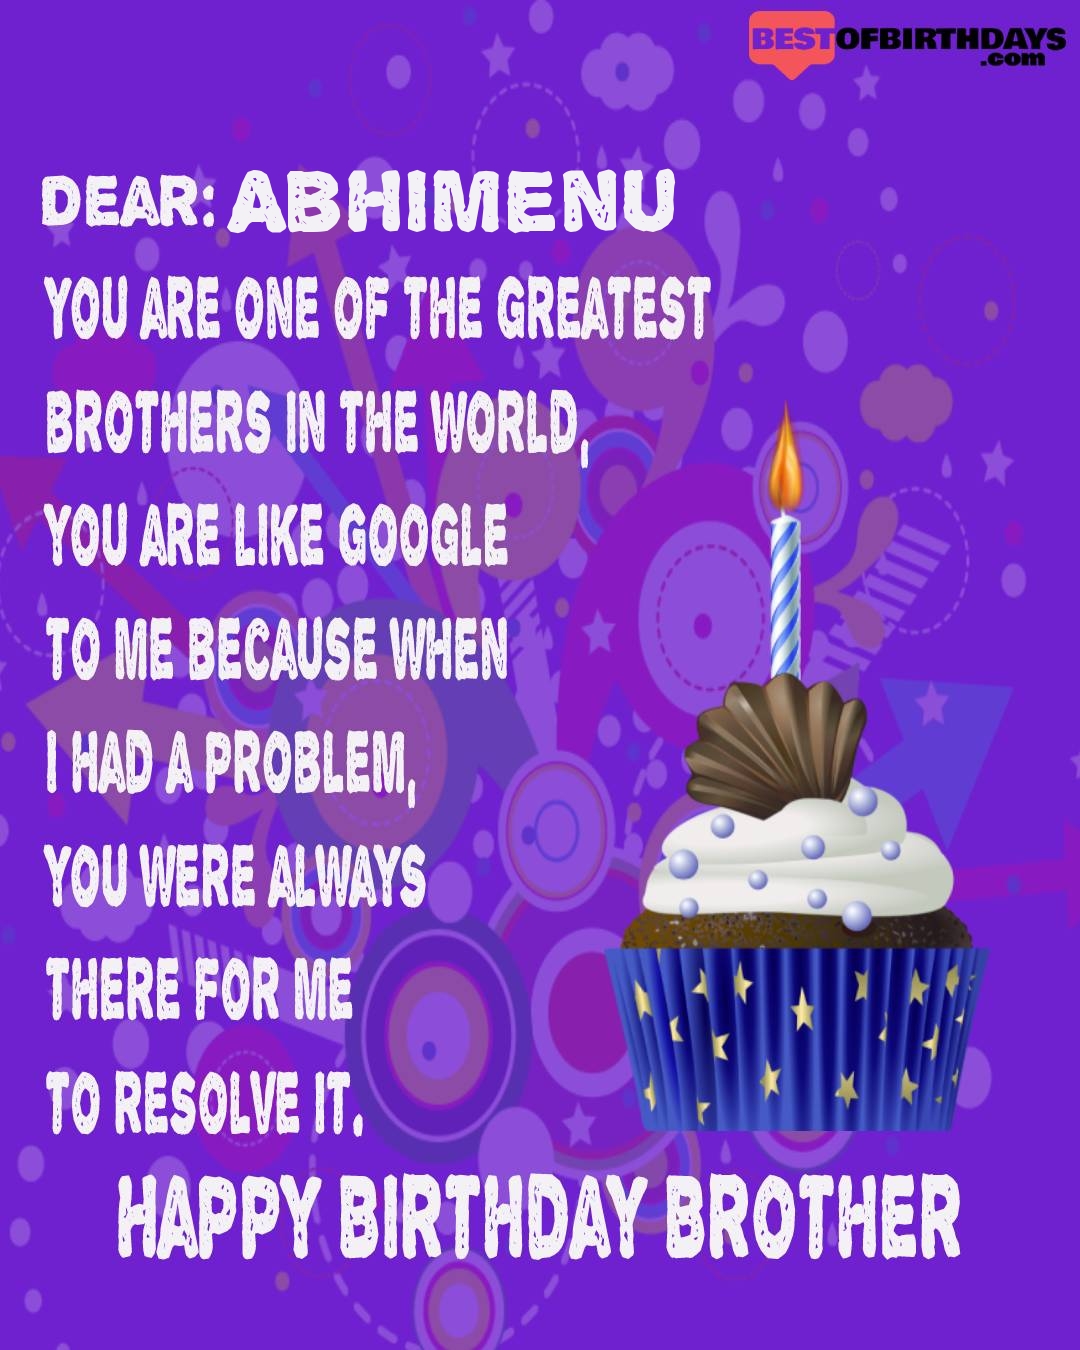 Happy birthday abhimenu bhai brother bro